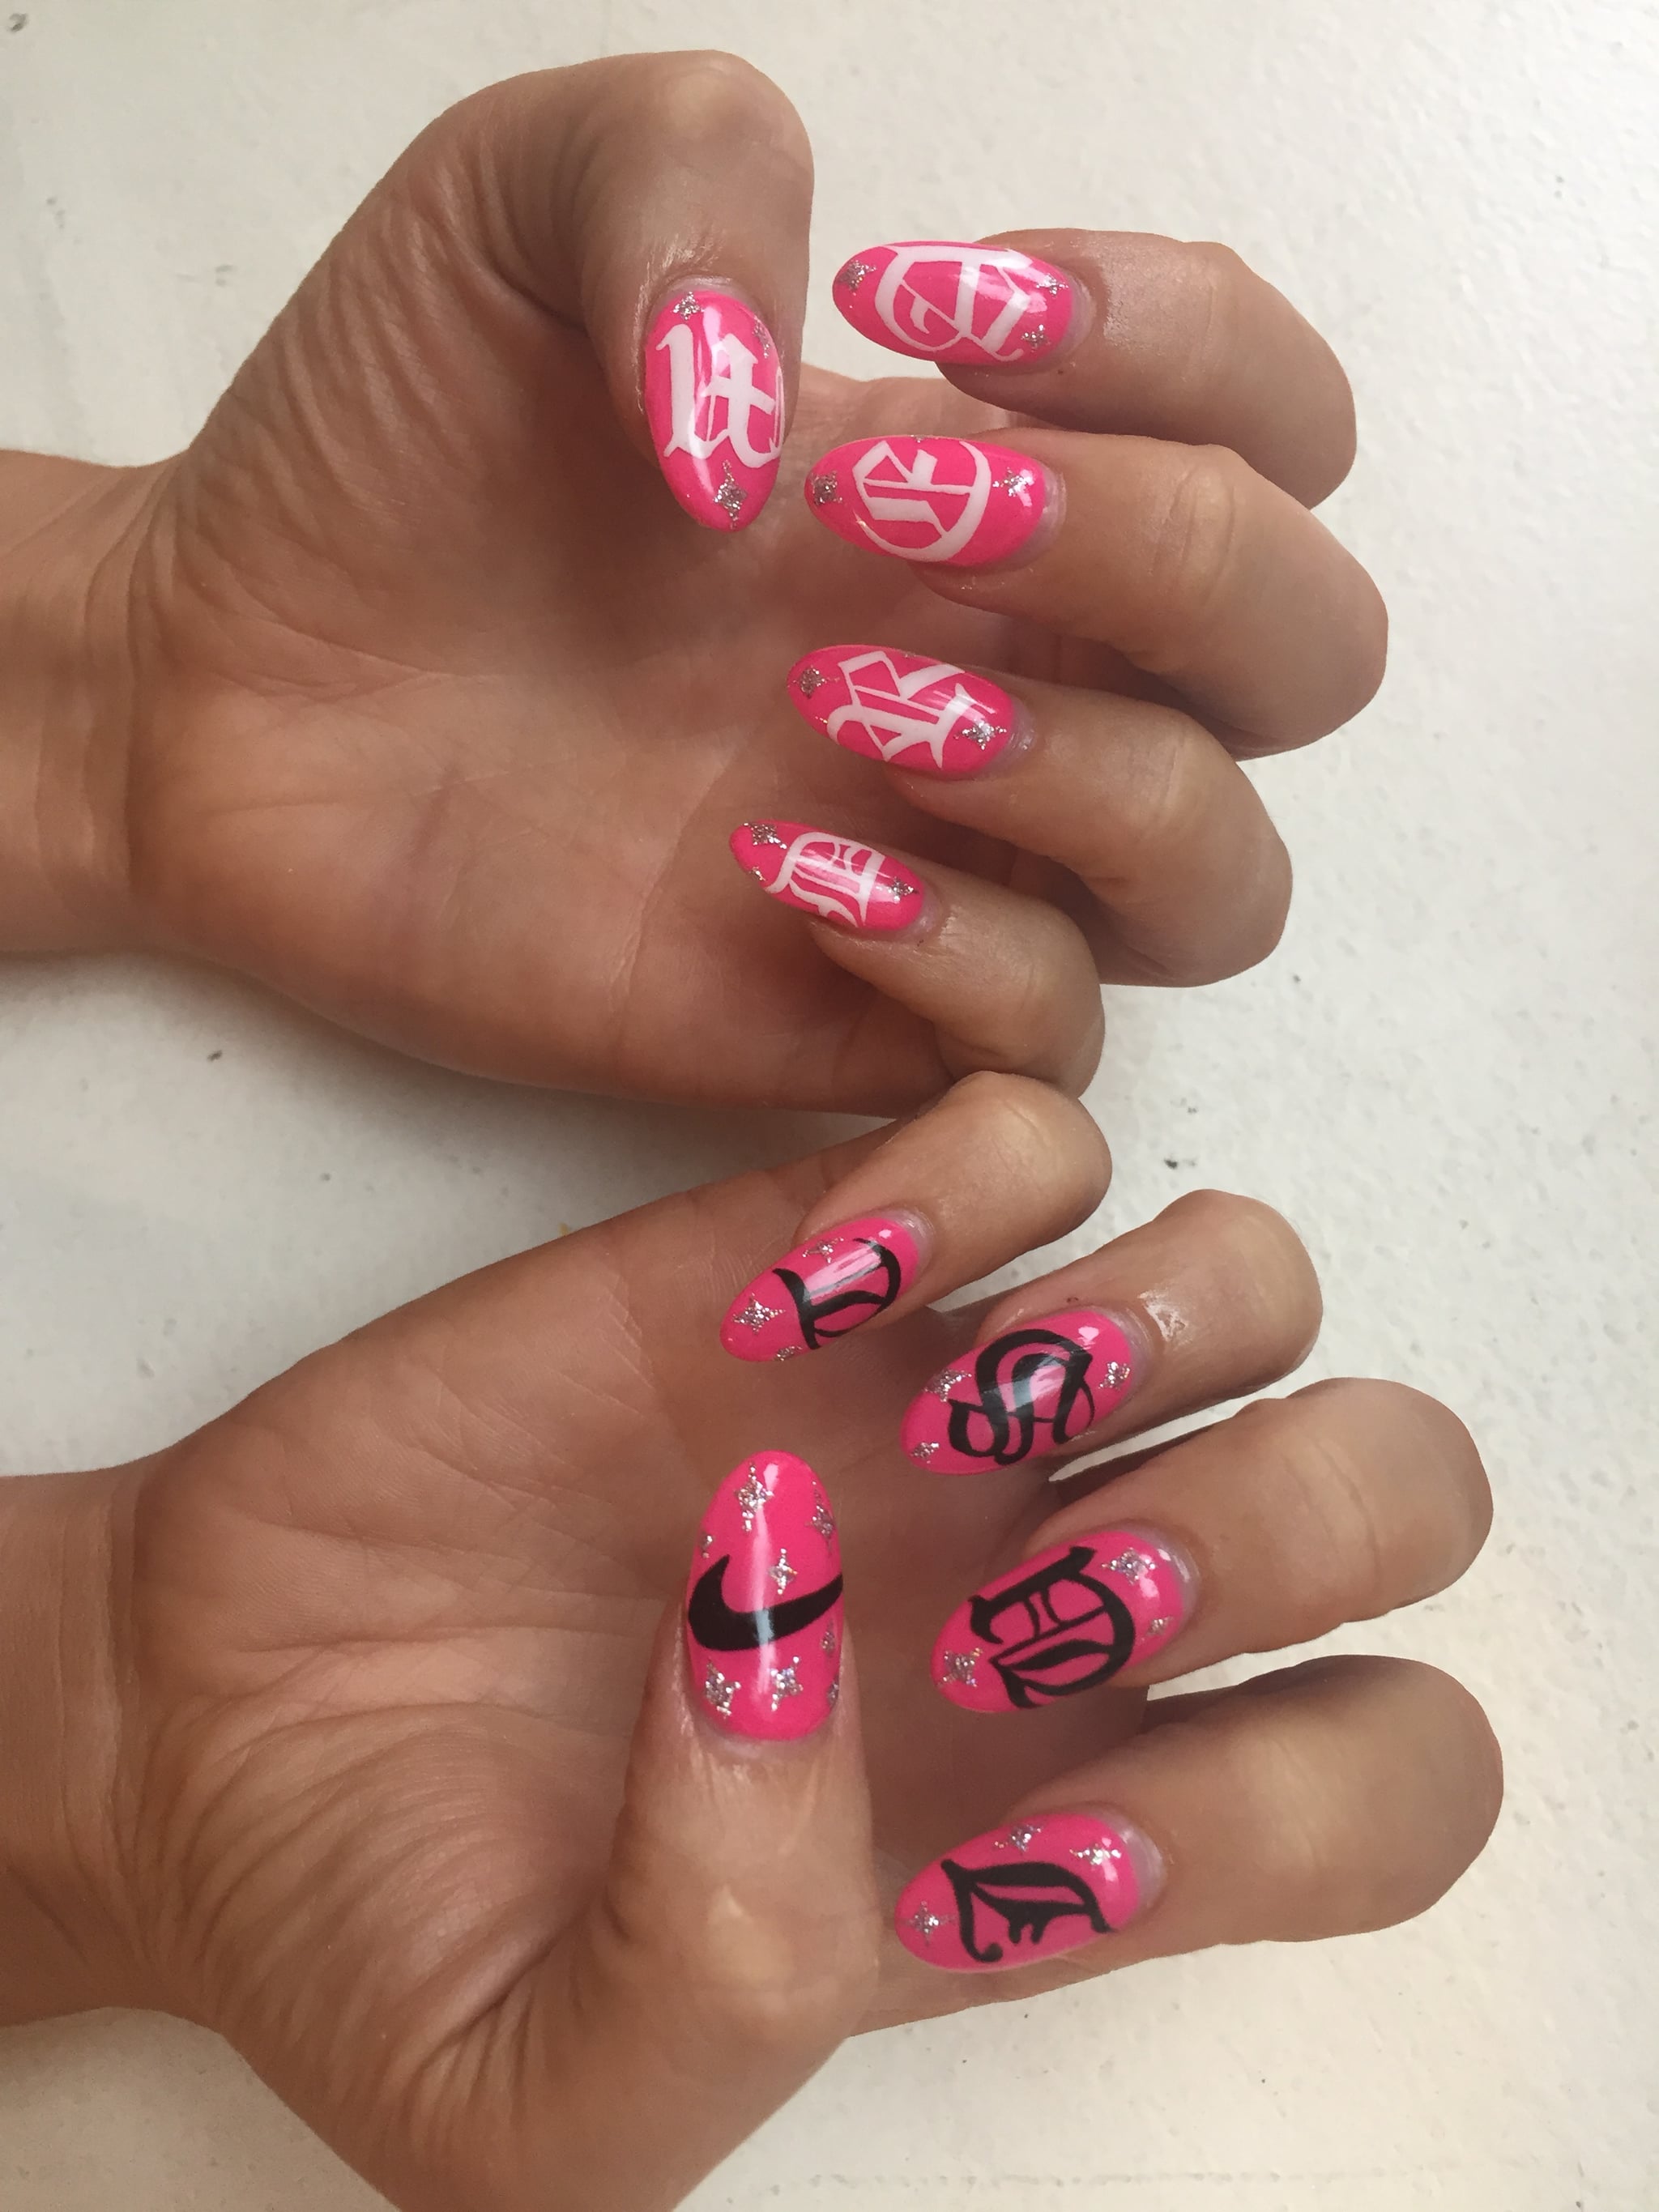 Alexa Luria's Nike Nail Art | Meet Alexa Luria — Ariana Grande's BFF and Your New Go-To For Damn Nail Art | POPSUGAR Beauty Photo 8